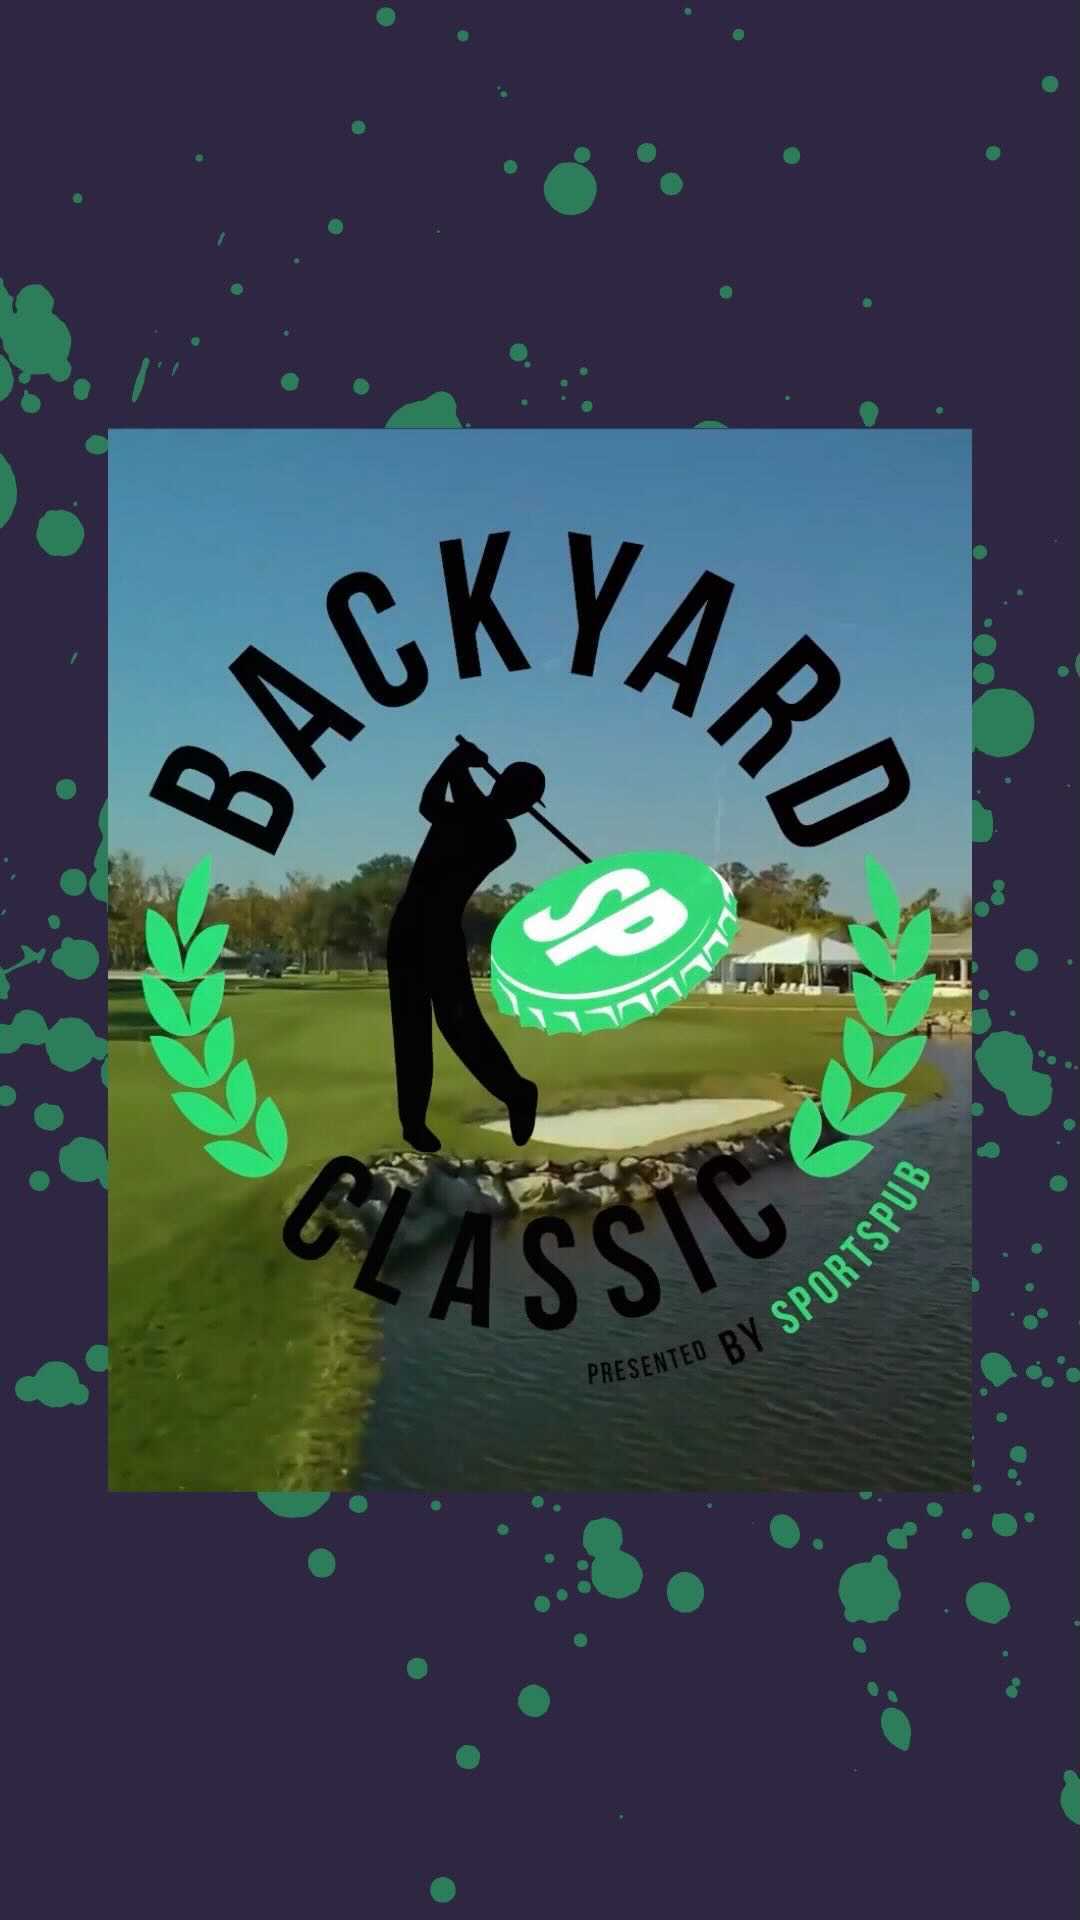 The Backyard Classic